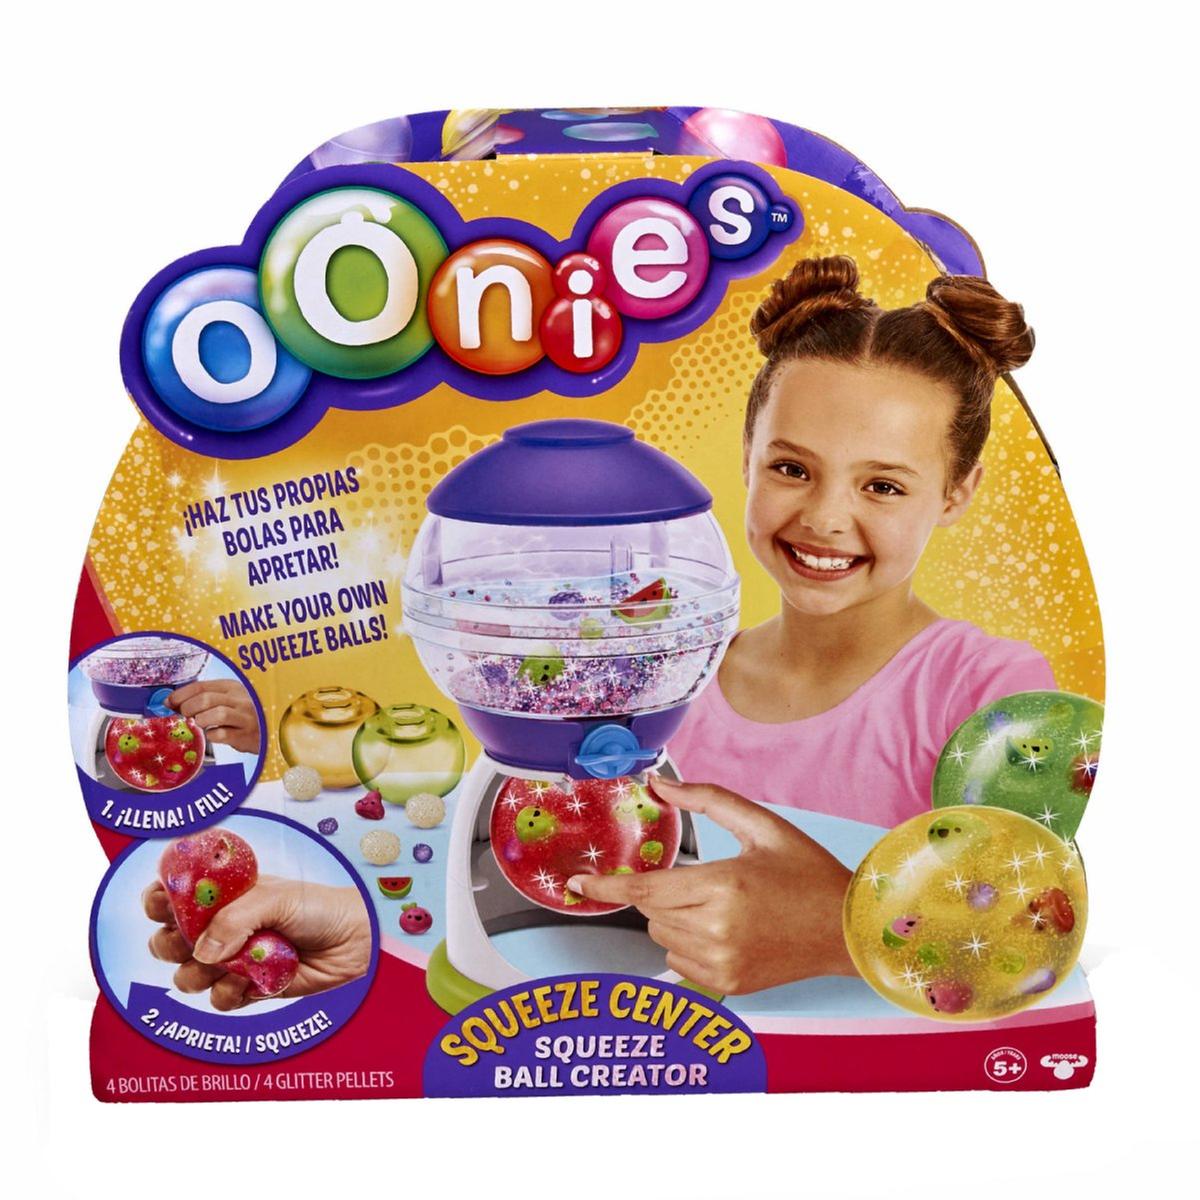 Oonies - Squeeze Center | Famosa | Toys"R"Us España